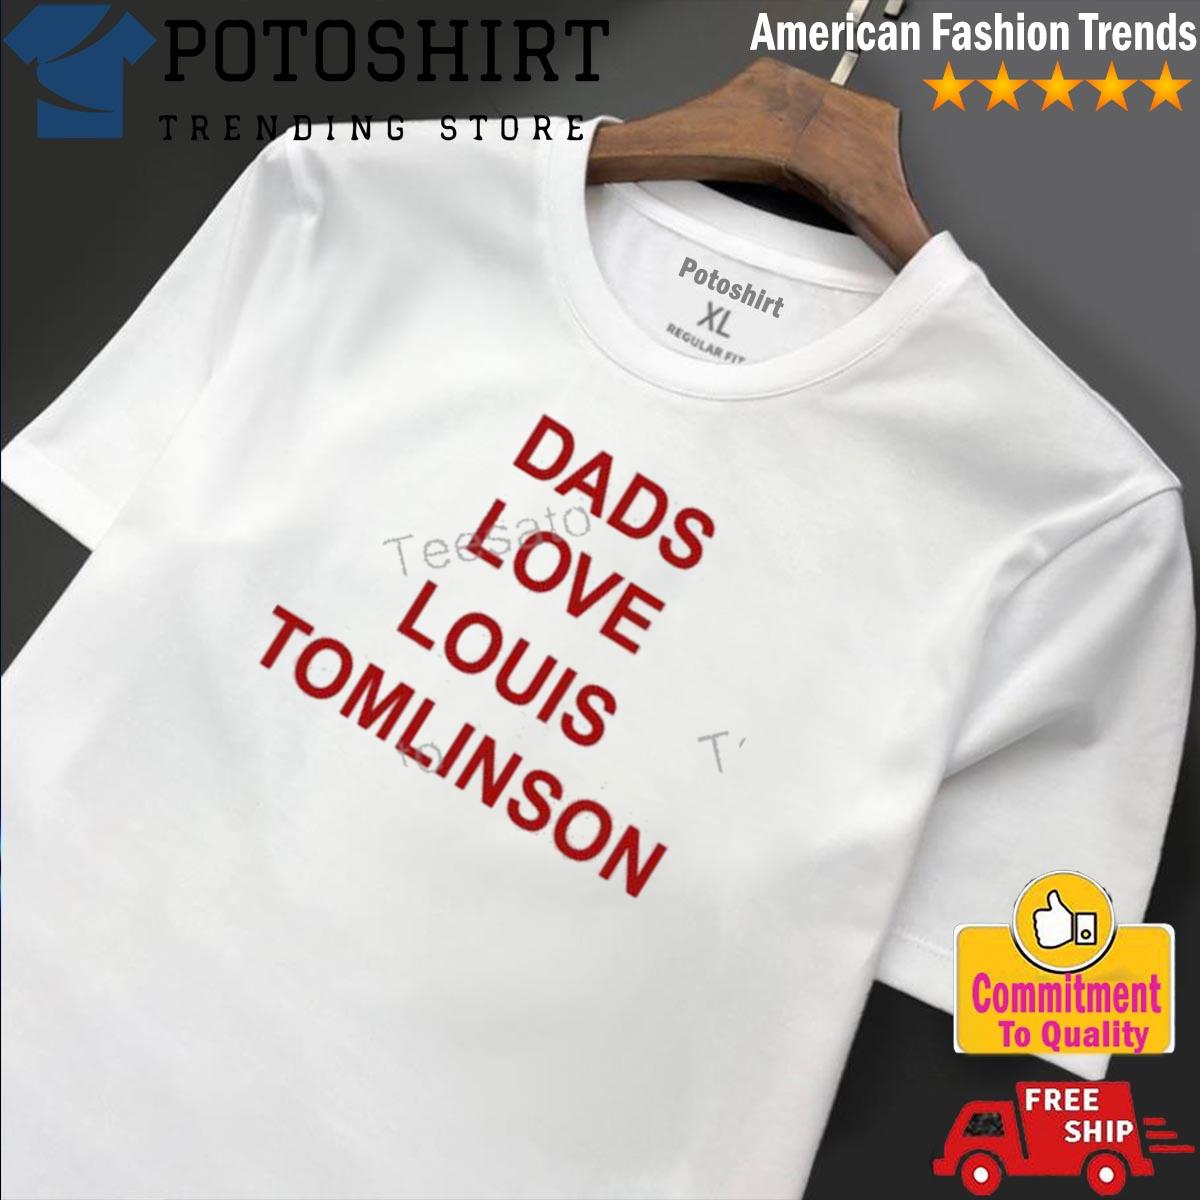 I Love Louis Tomlinson Shirt